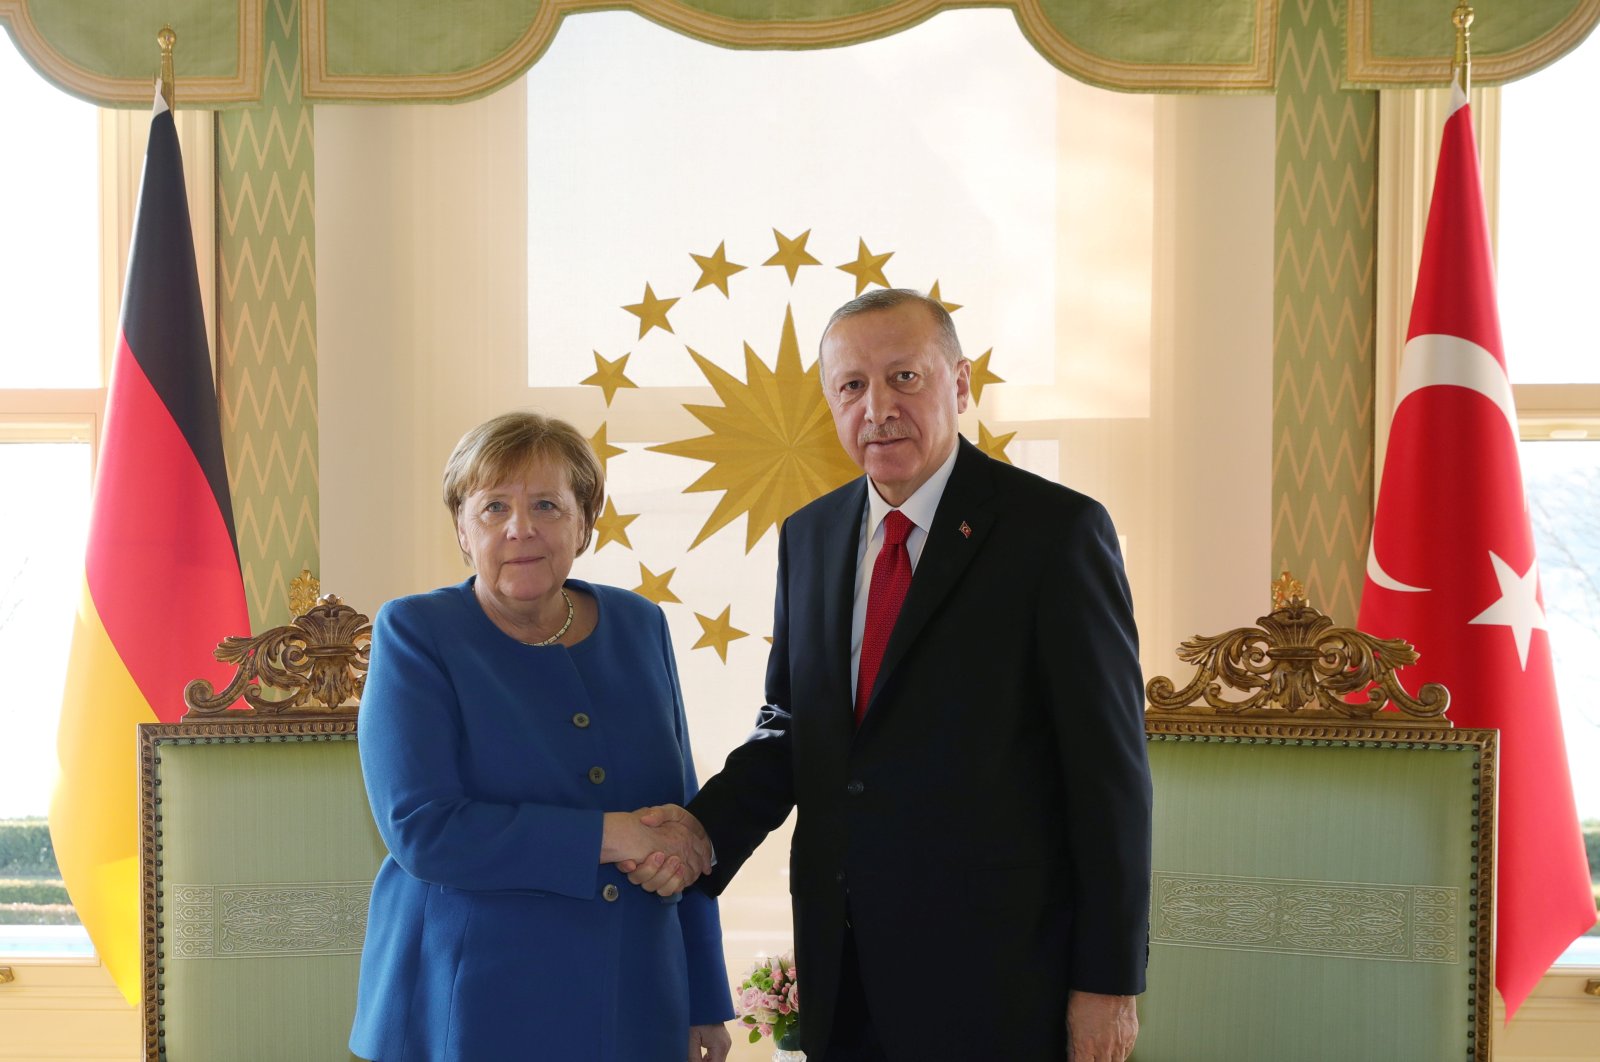 President Tayyip Erdoğan shakes hands with German Chancellor Angela Merkel during their meeting in Istanbul, Turkey, Jan. 24, 2020. (Presidential Press Office/Handout via Reuters)